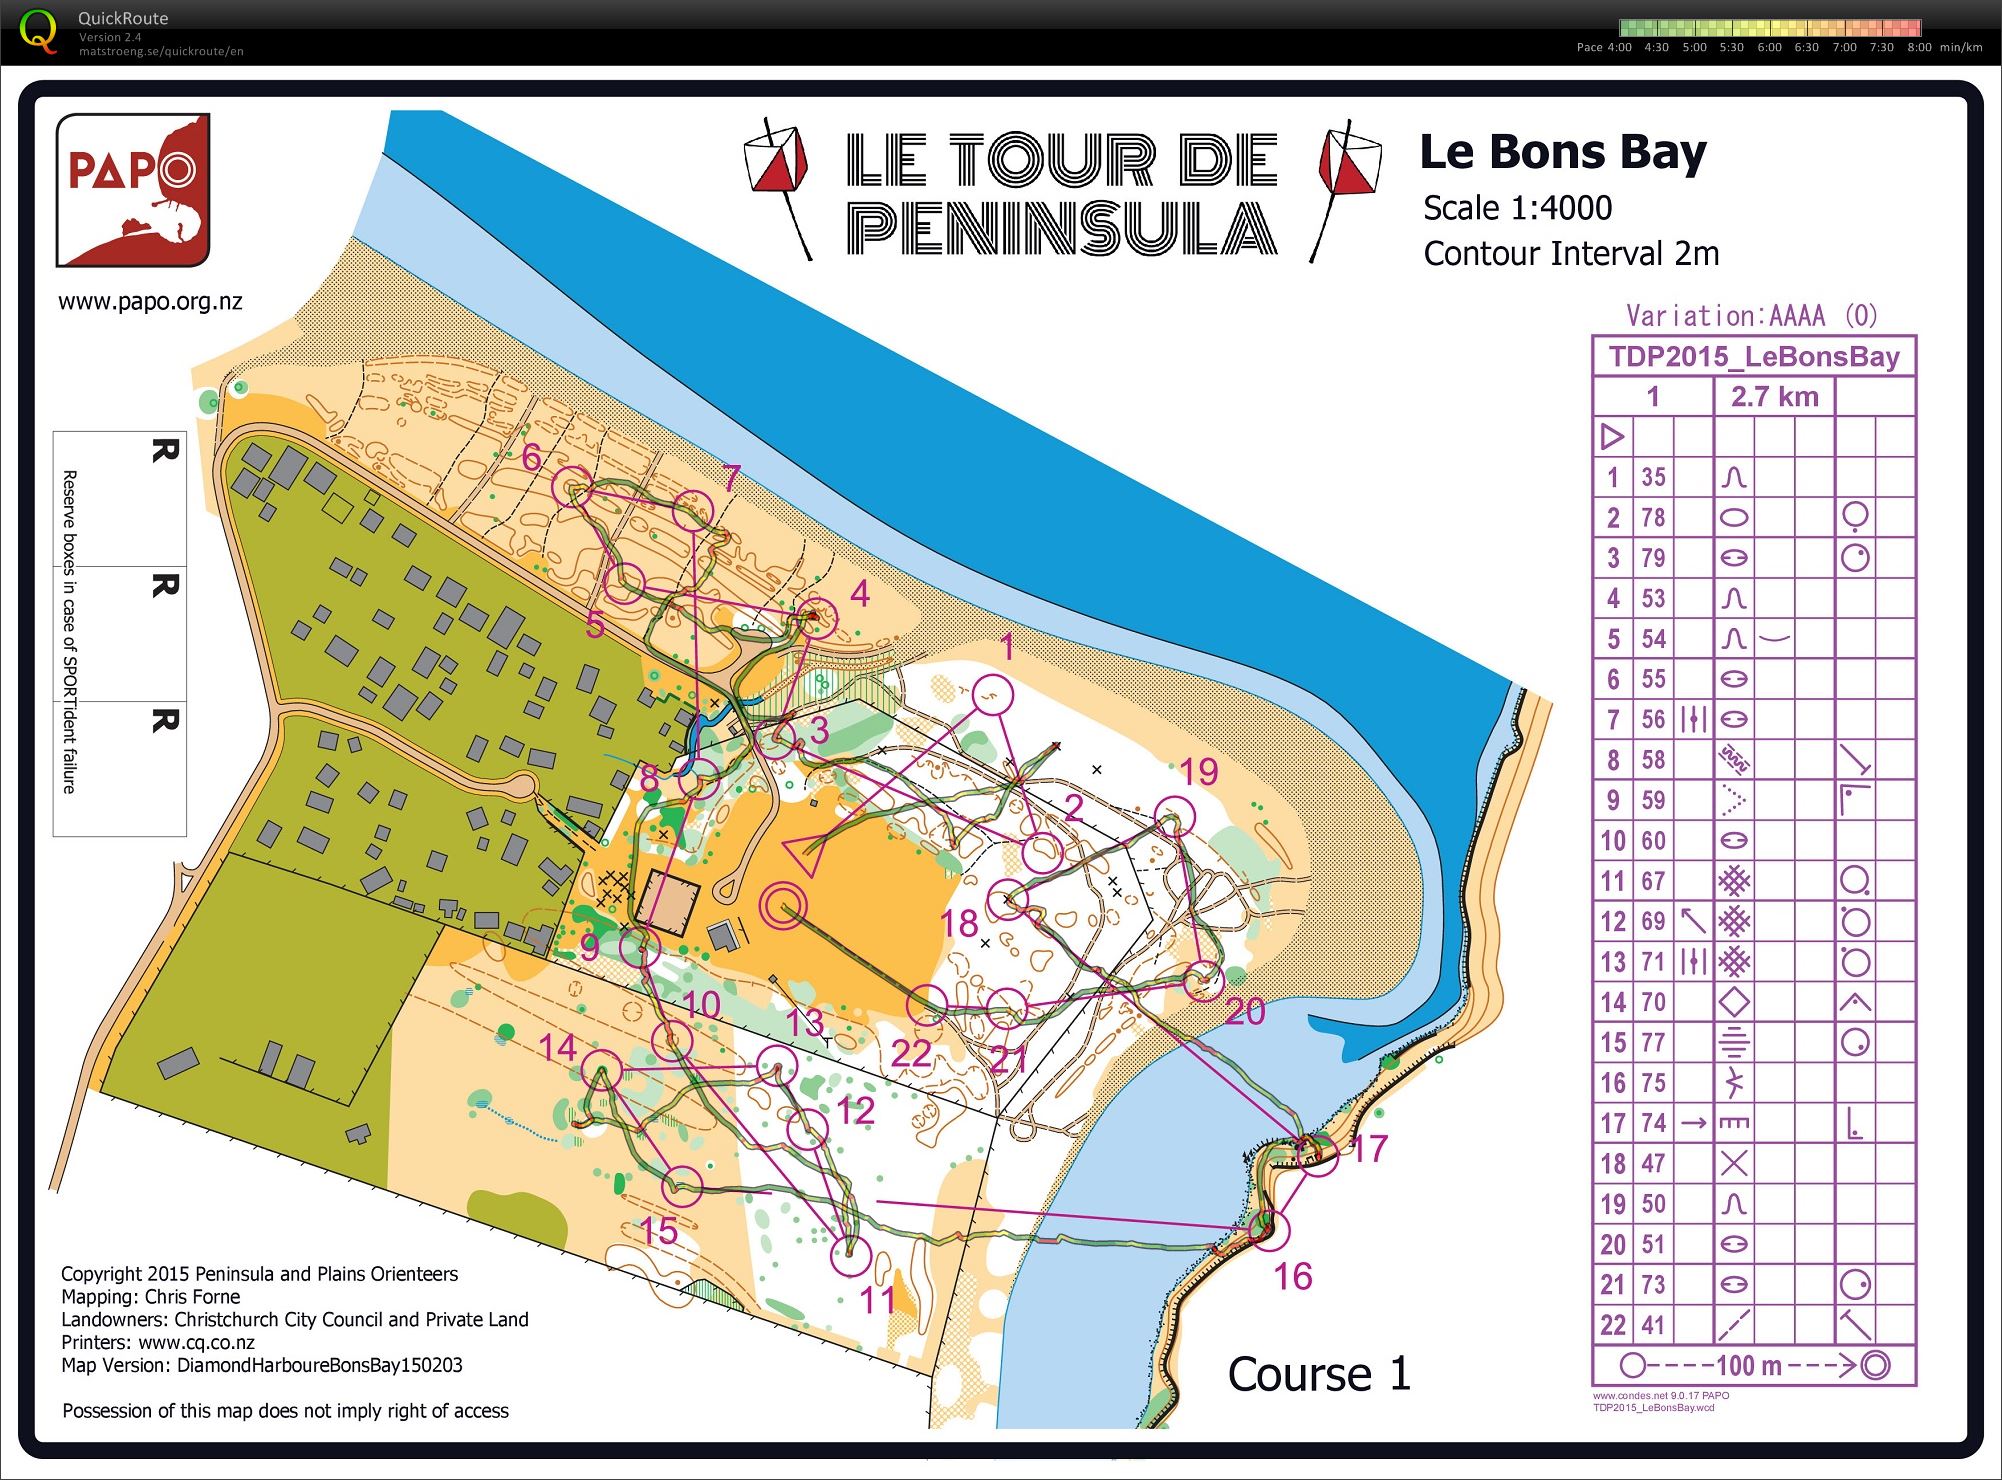 Tour De Peninsula Stage 6 (07.02.2015)